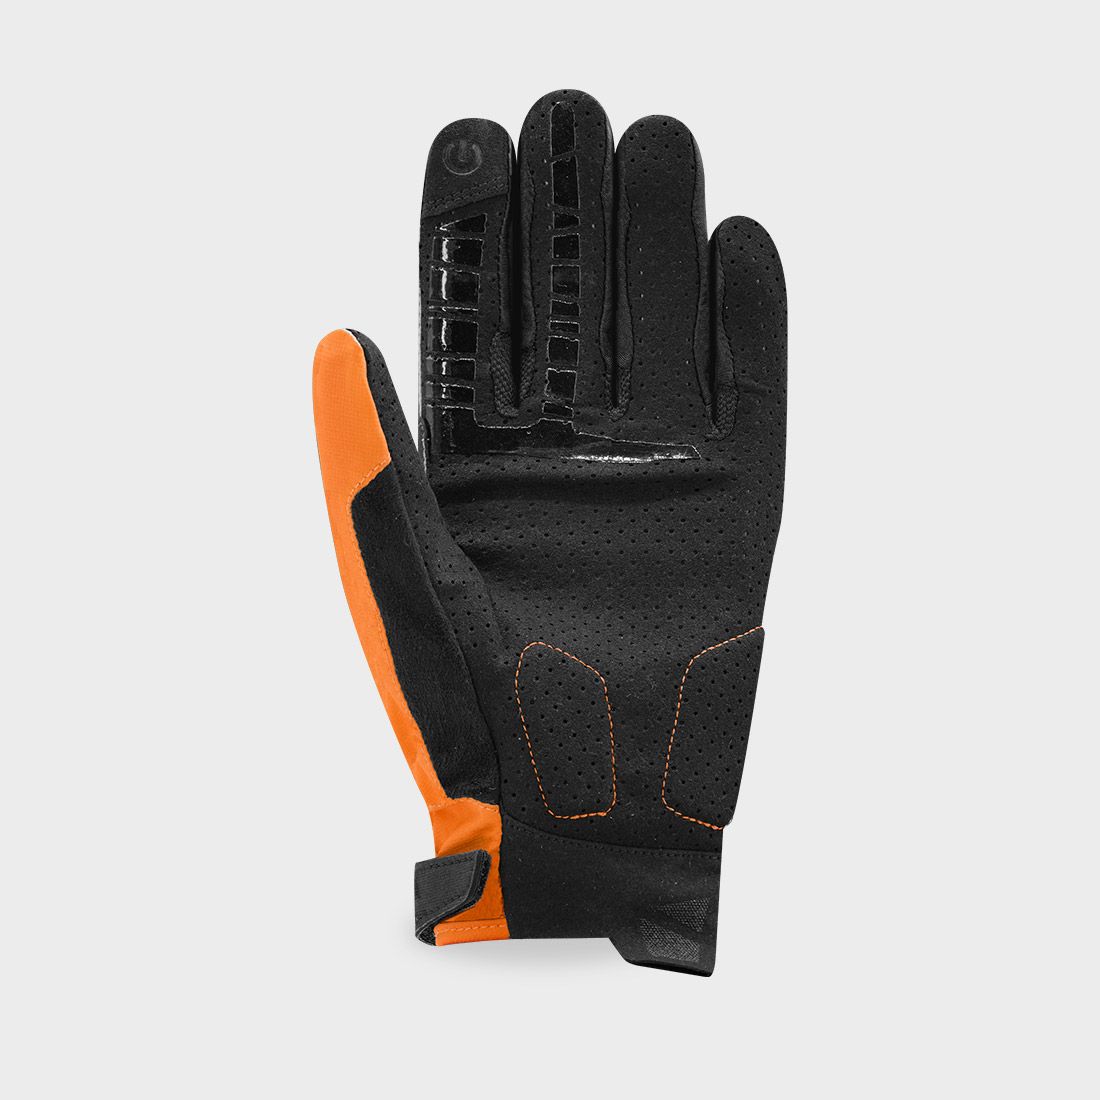 ROCK 3 - Bike Gloves